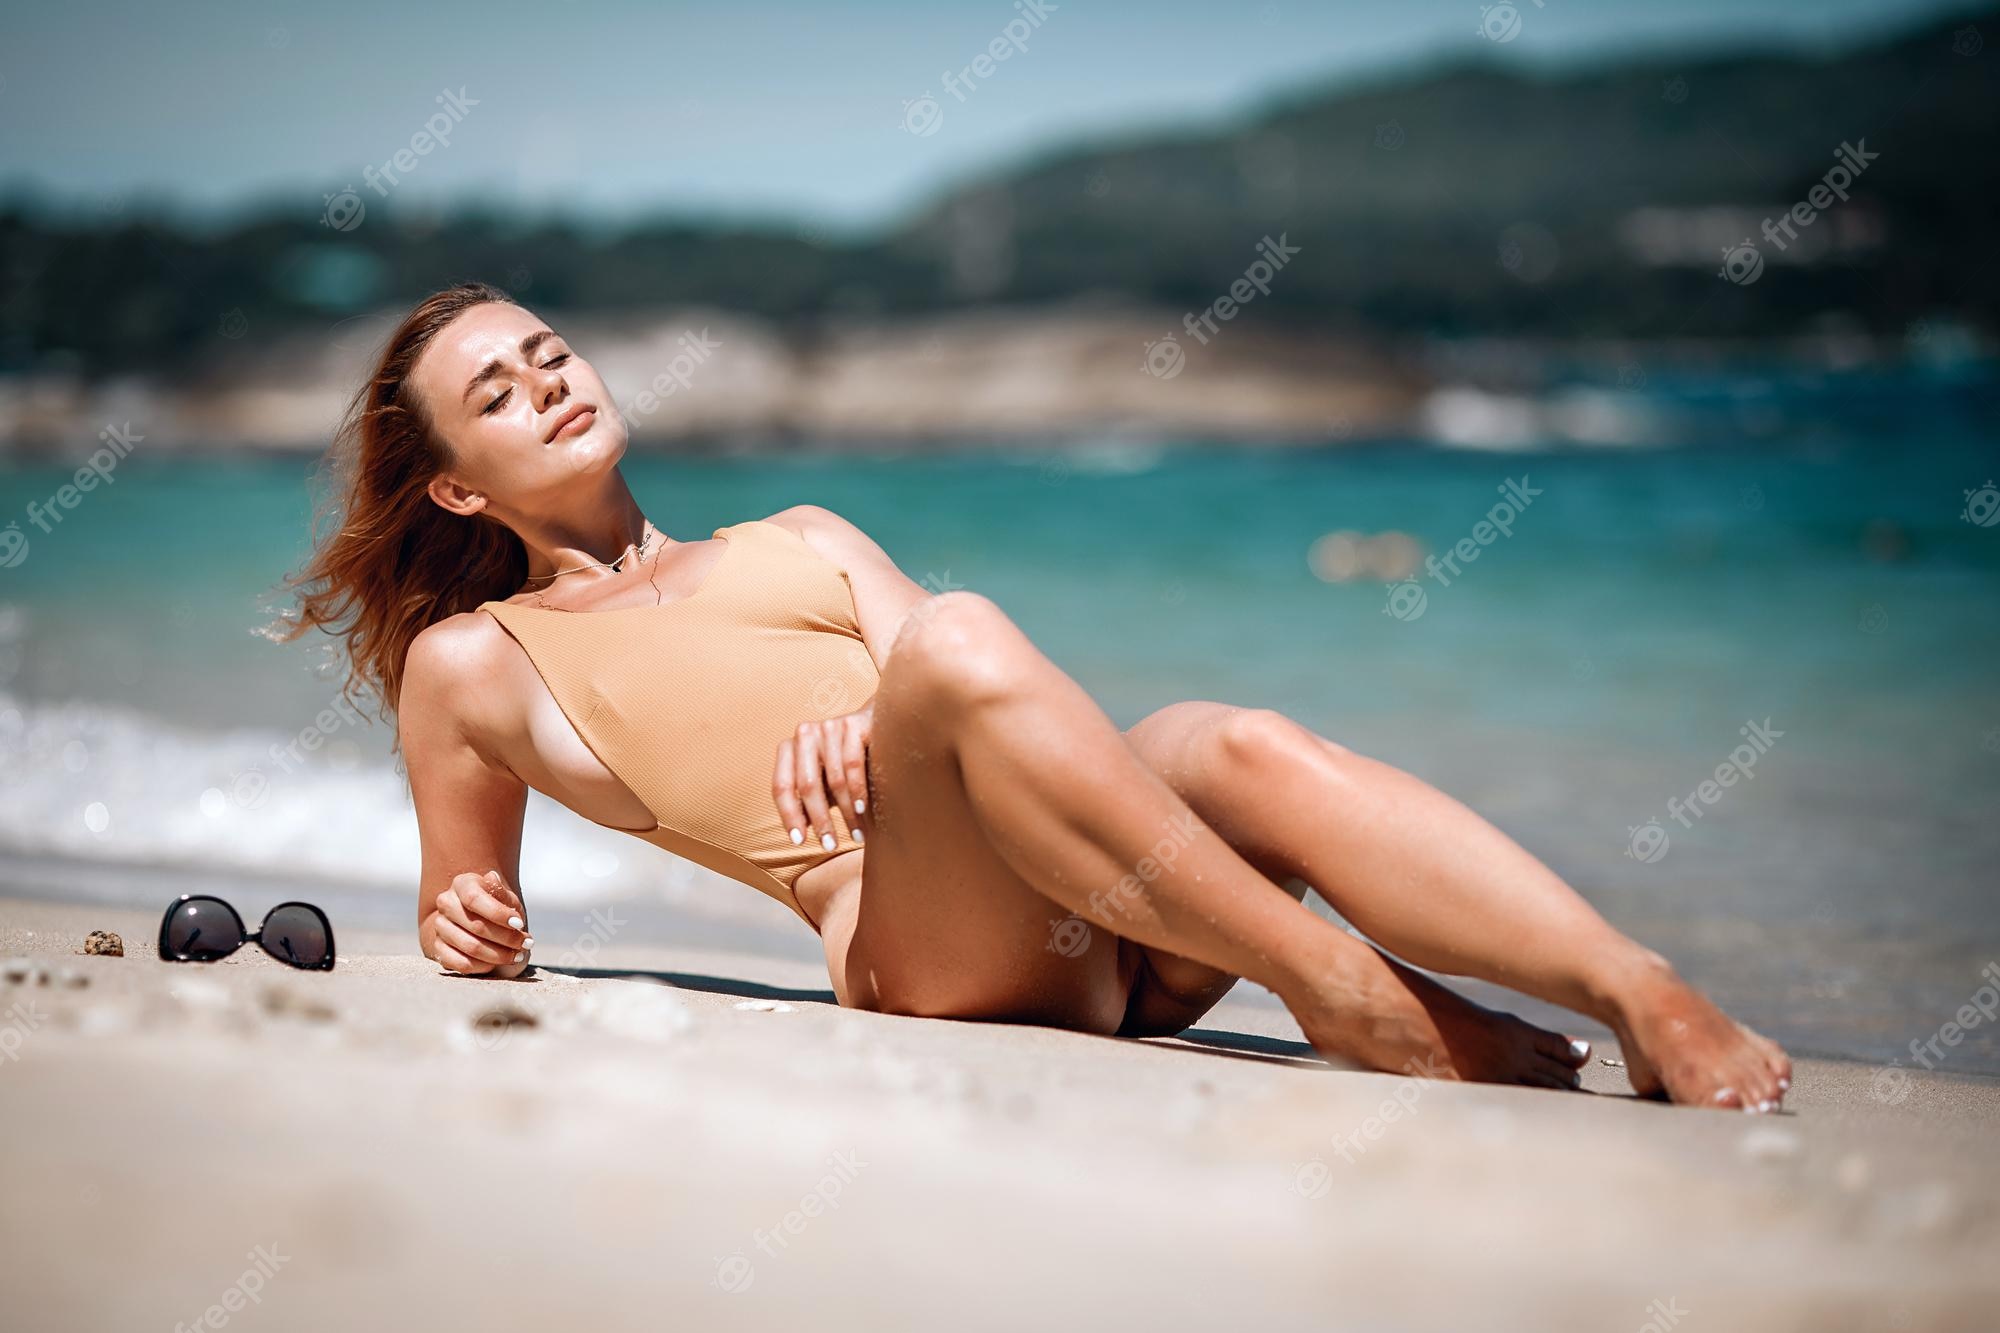 beth franz share nude beach girls videos photos